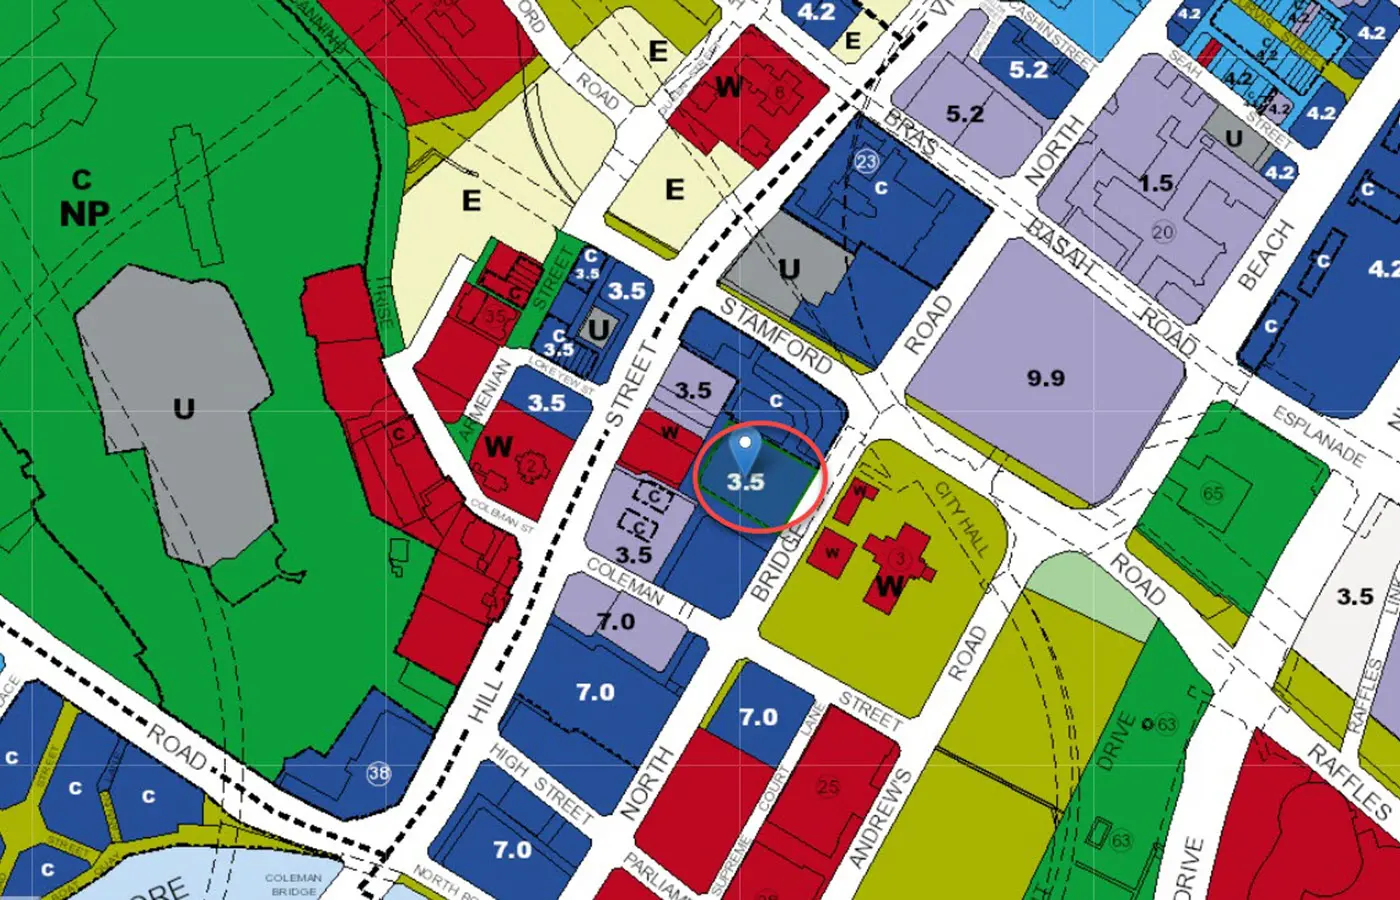 Eden Residences Capitol Condo Location - URA Master Plan Map